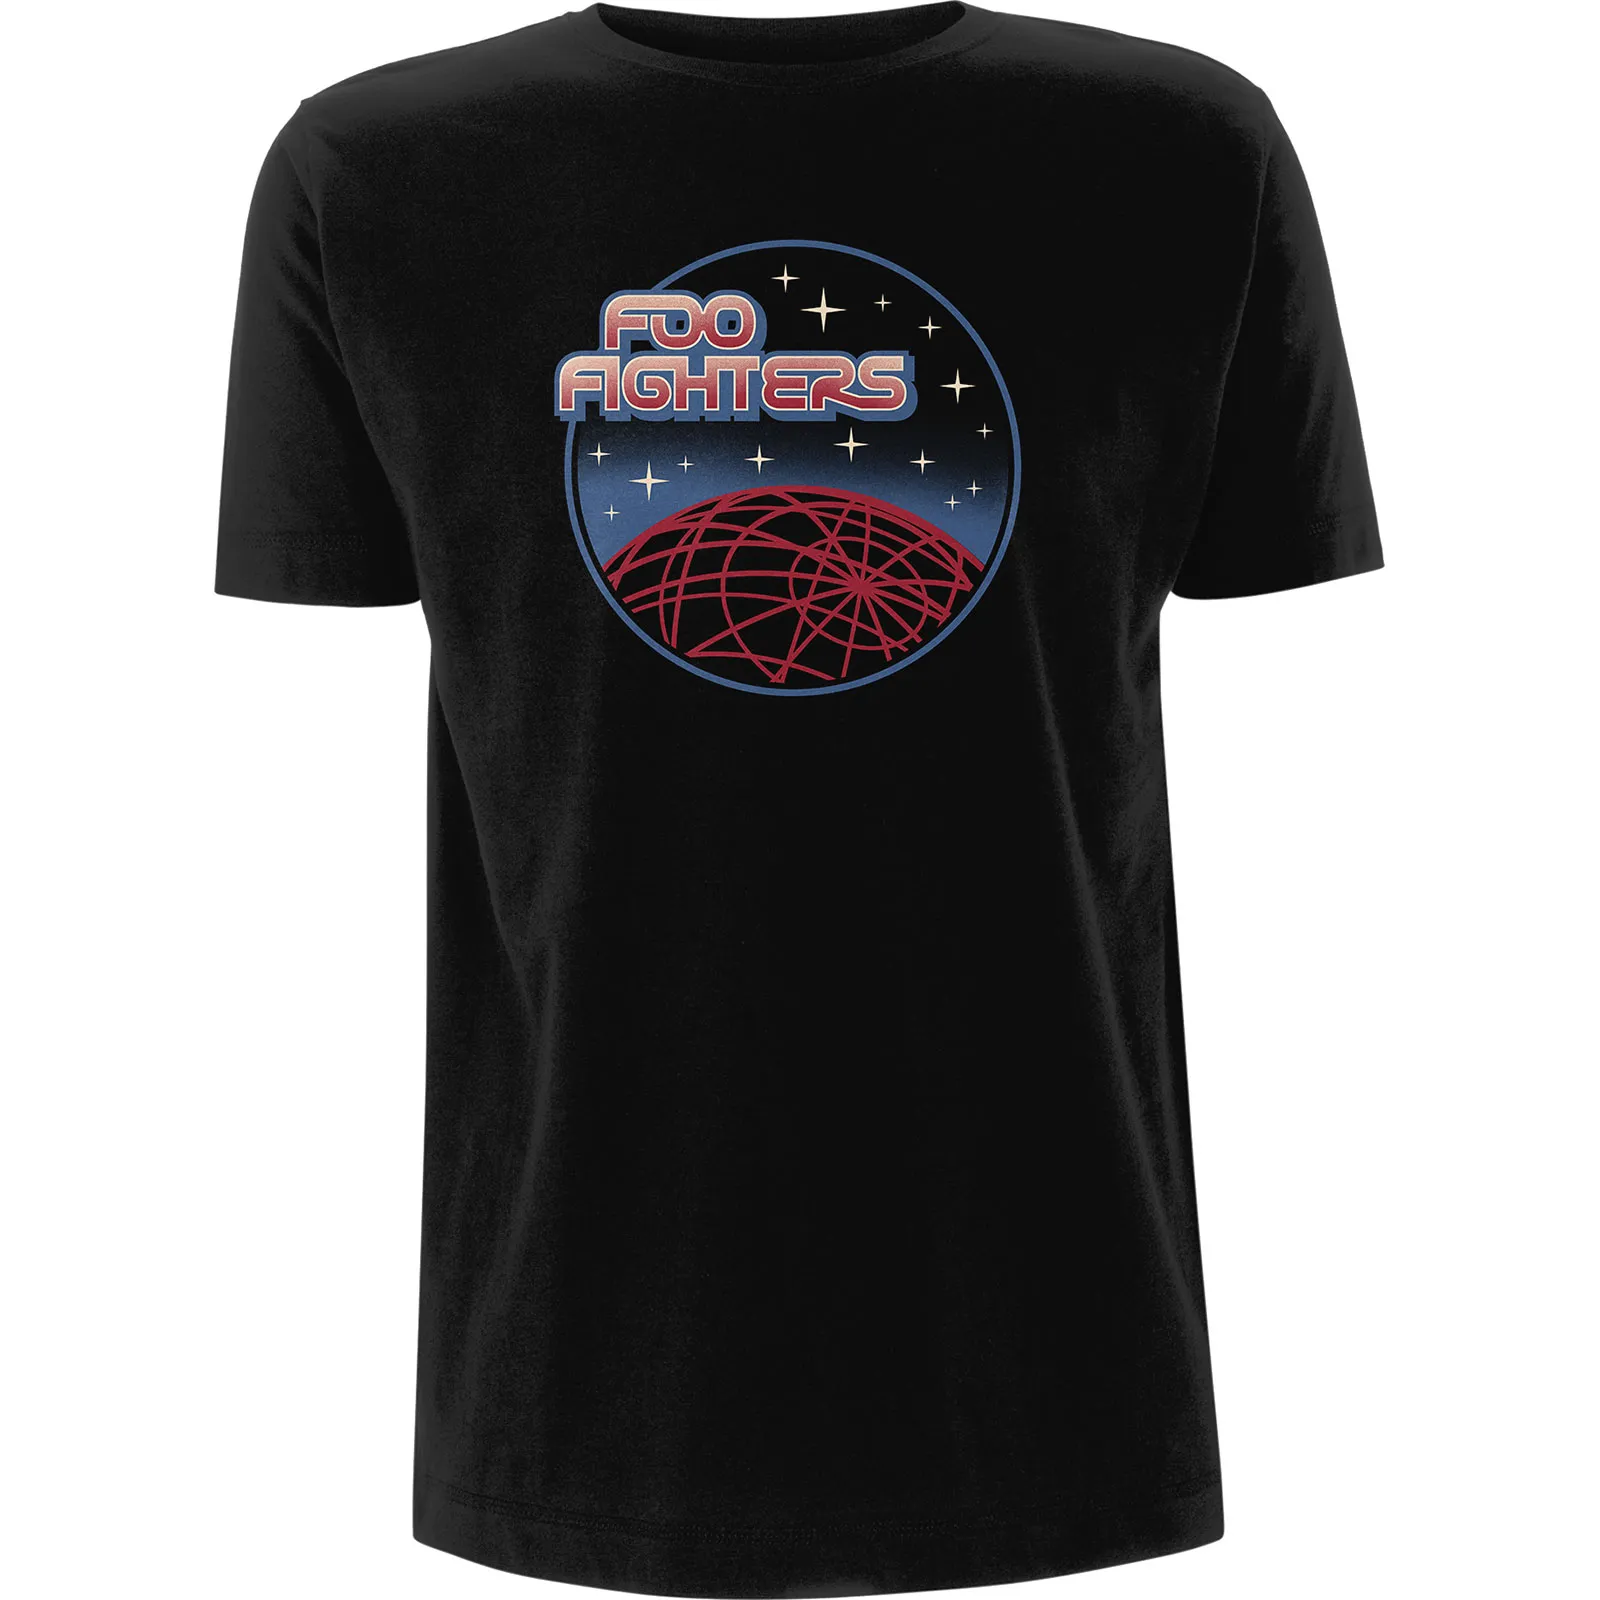 Foo Fighters - Unisex T-Shirt Vector Space artwork